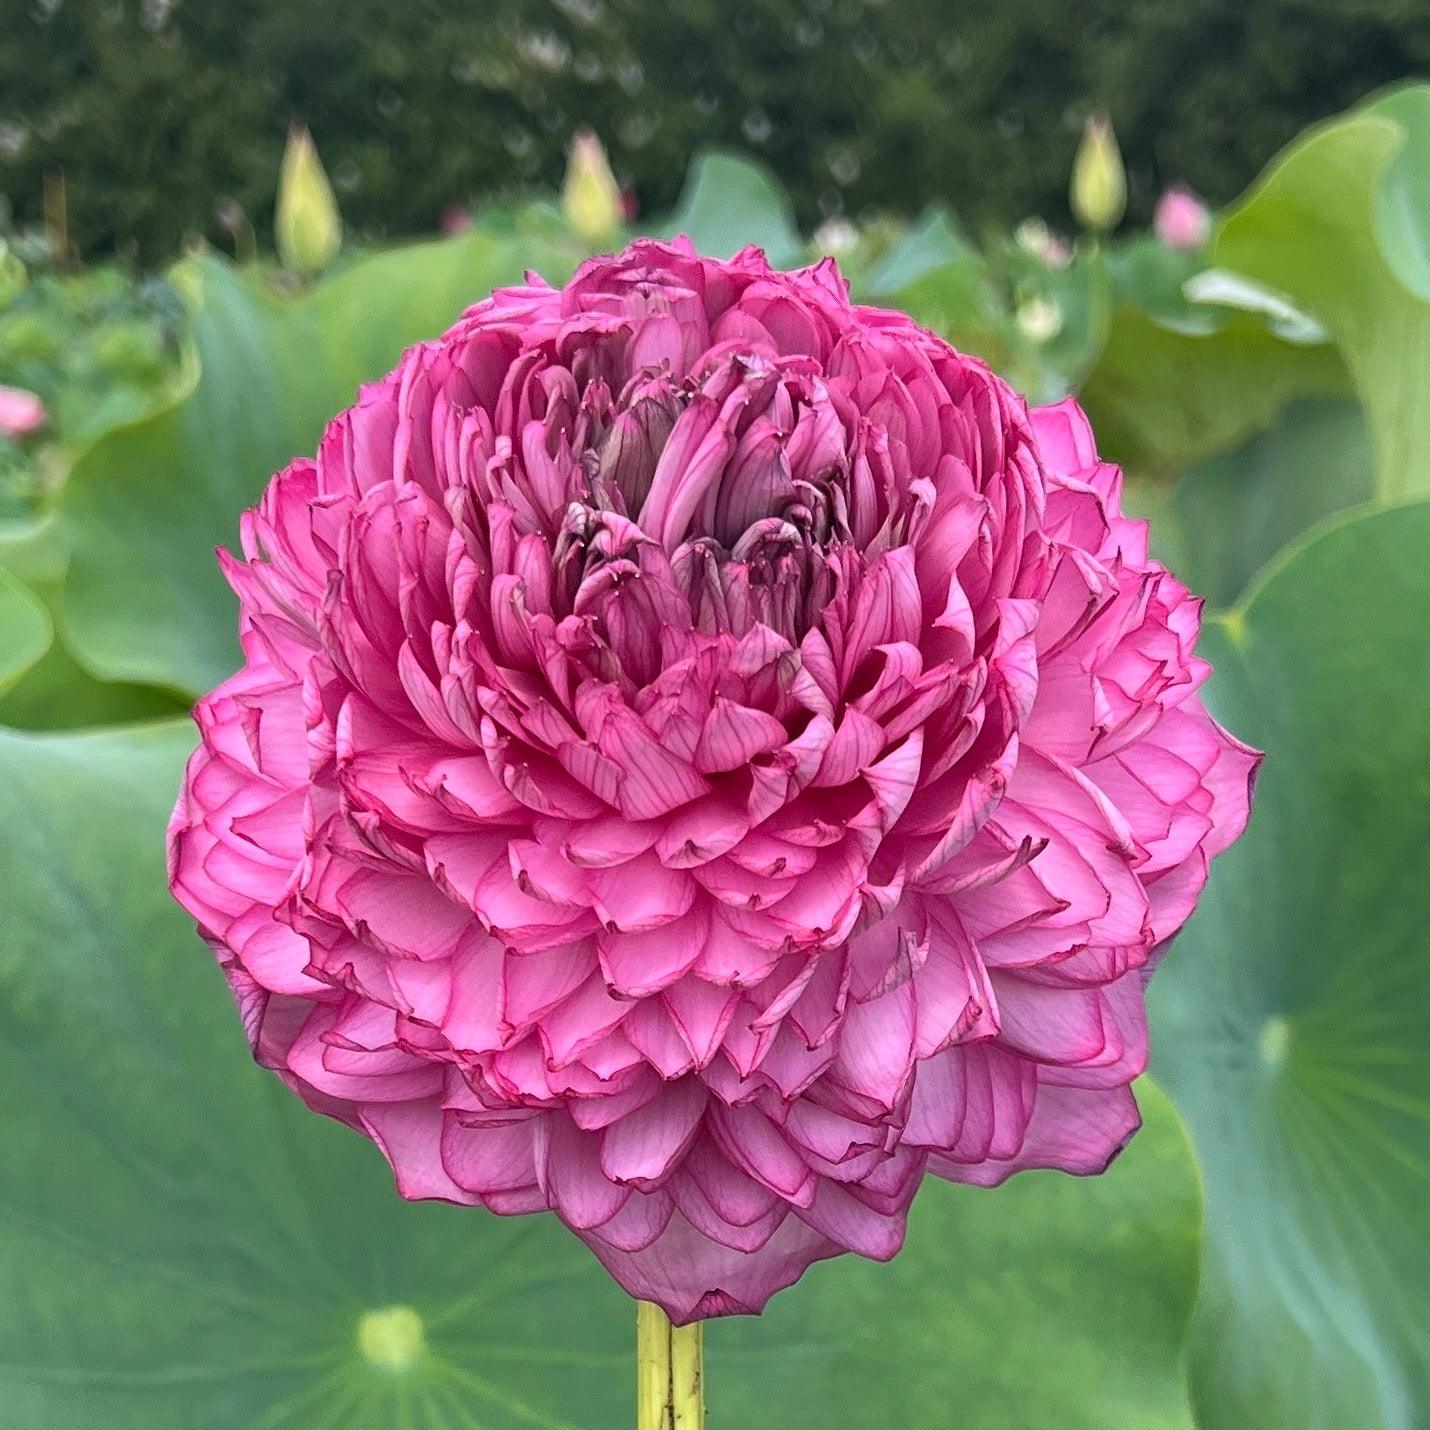 Ultimate Thousand Petals Lotus (Bare Root) - Play It Koi